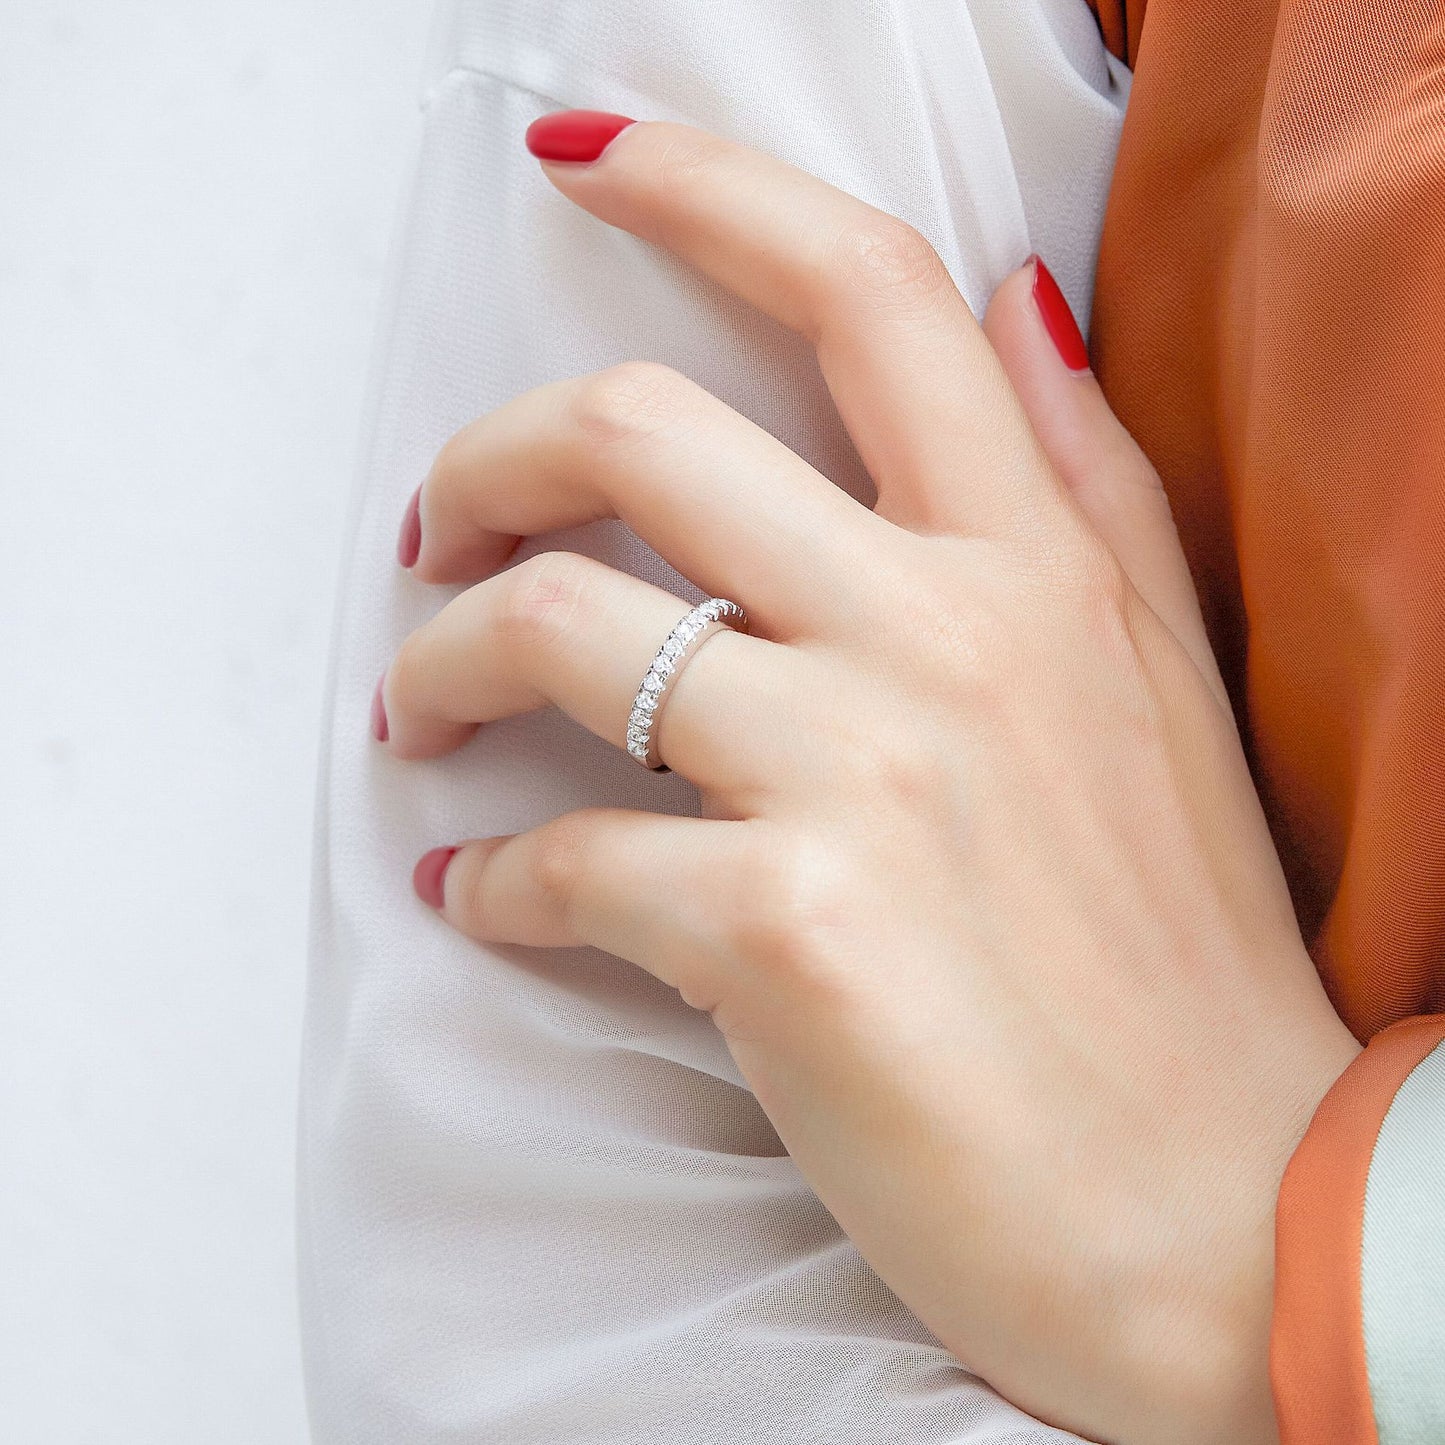 Half Row Heart Shaped Zircon Silver Ring for Women